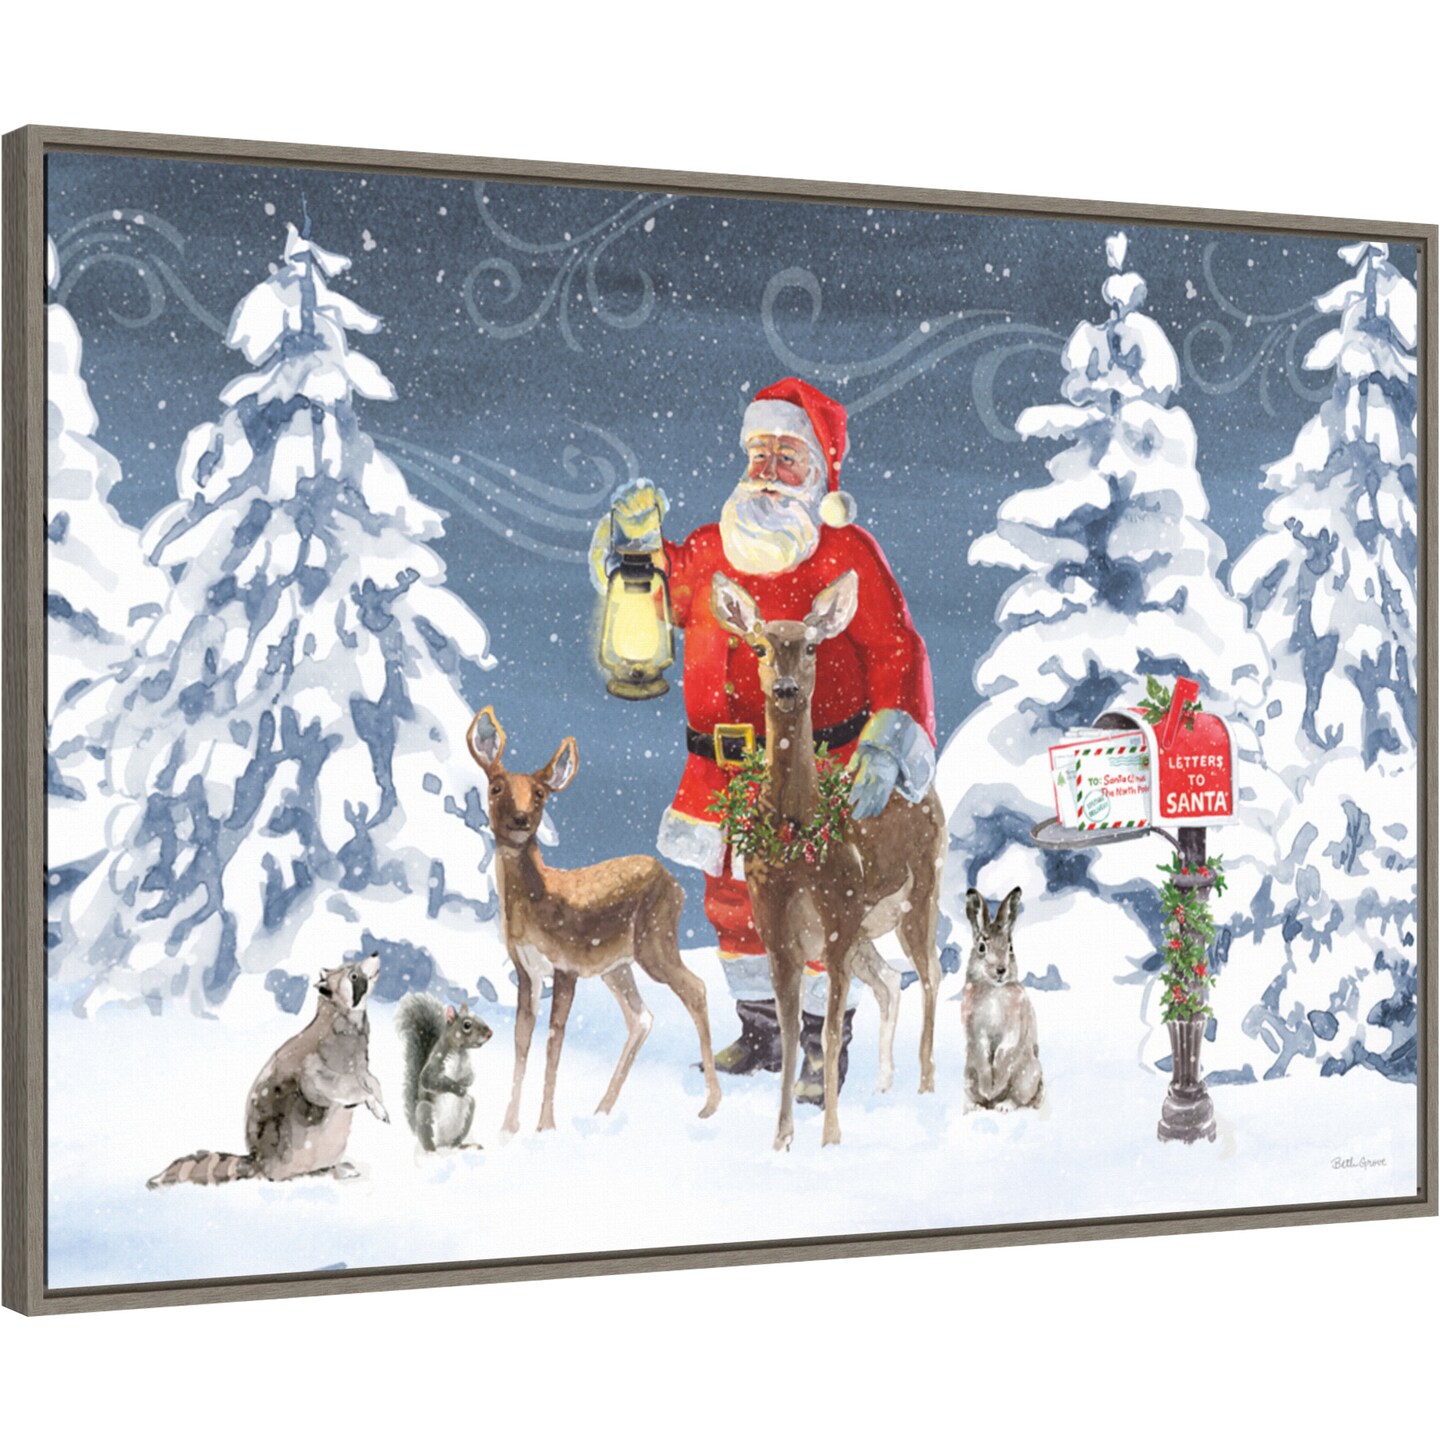 Santas List I by Beth Grove 33-in. W x 23-in. H. Canvas Wall Art Print Framed in Grey